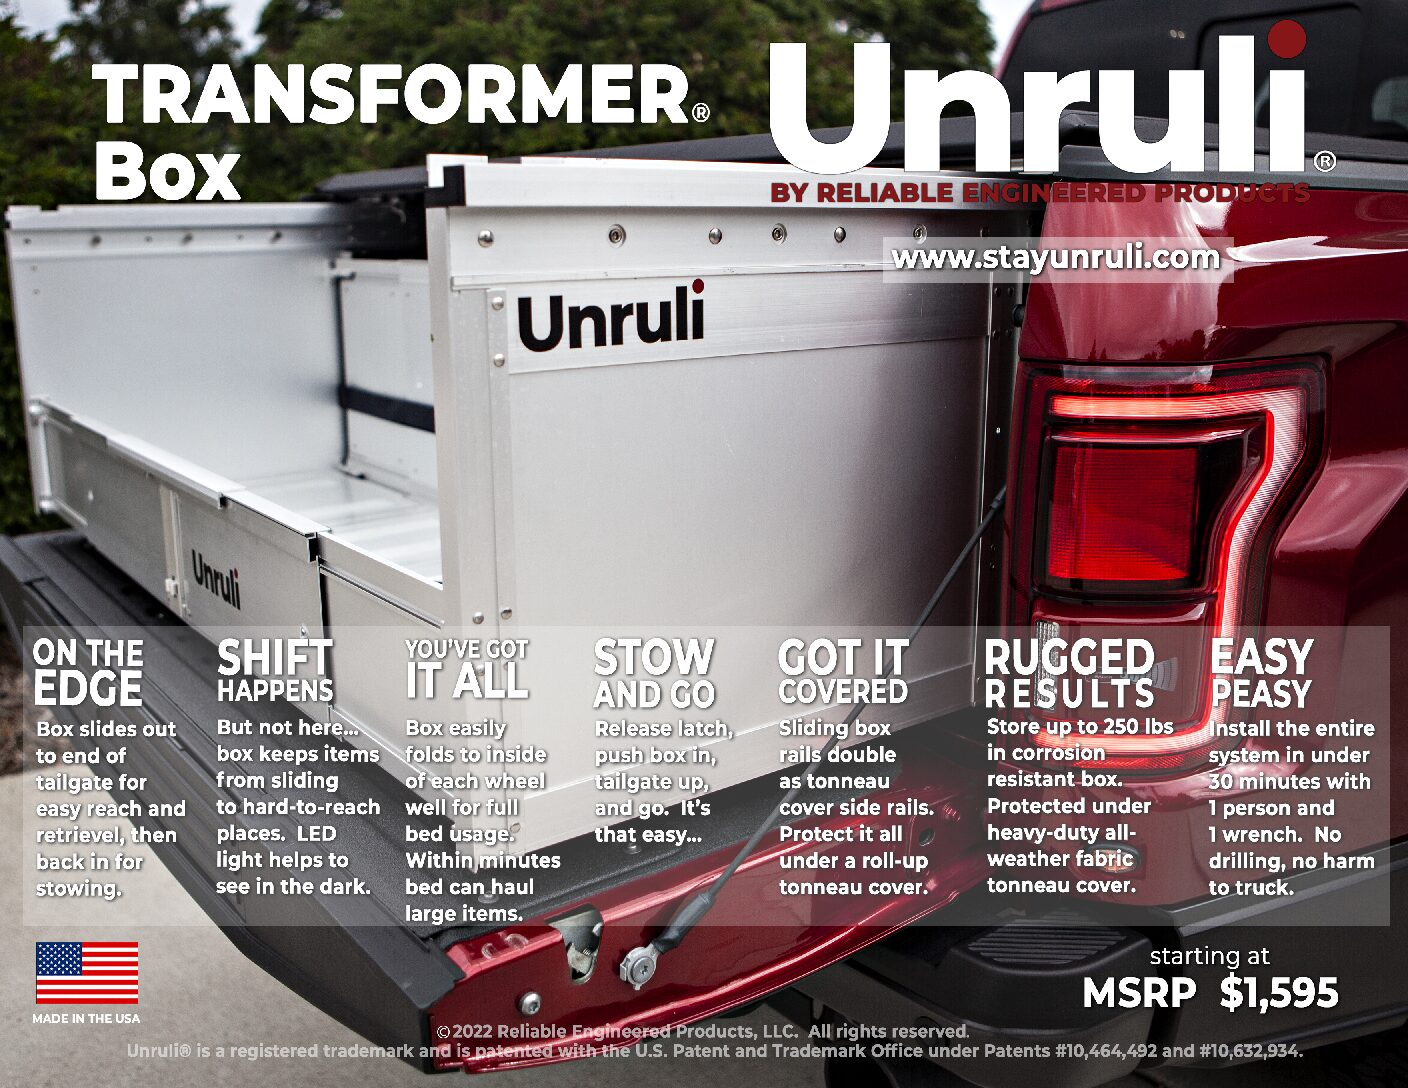 Unruli Foldable Box features